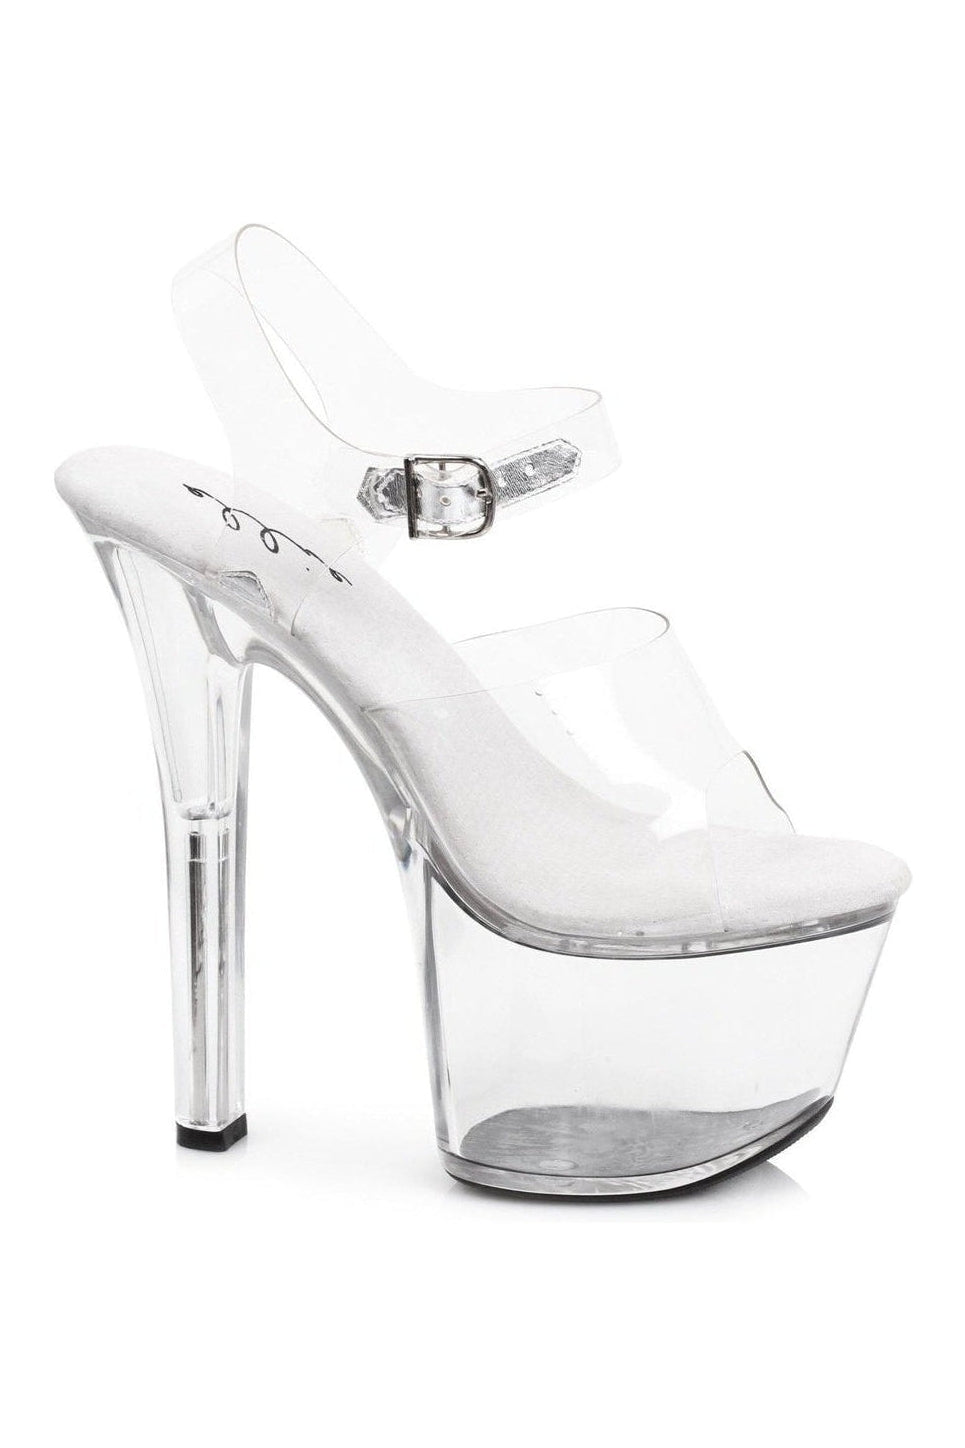 Ellie Shoes Clear Sandals Platform Stripper Shoes | Buy at Sexyshoes.com